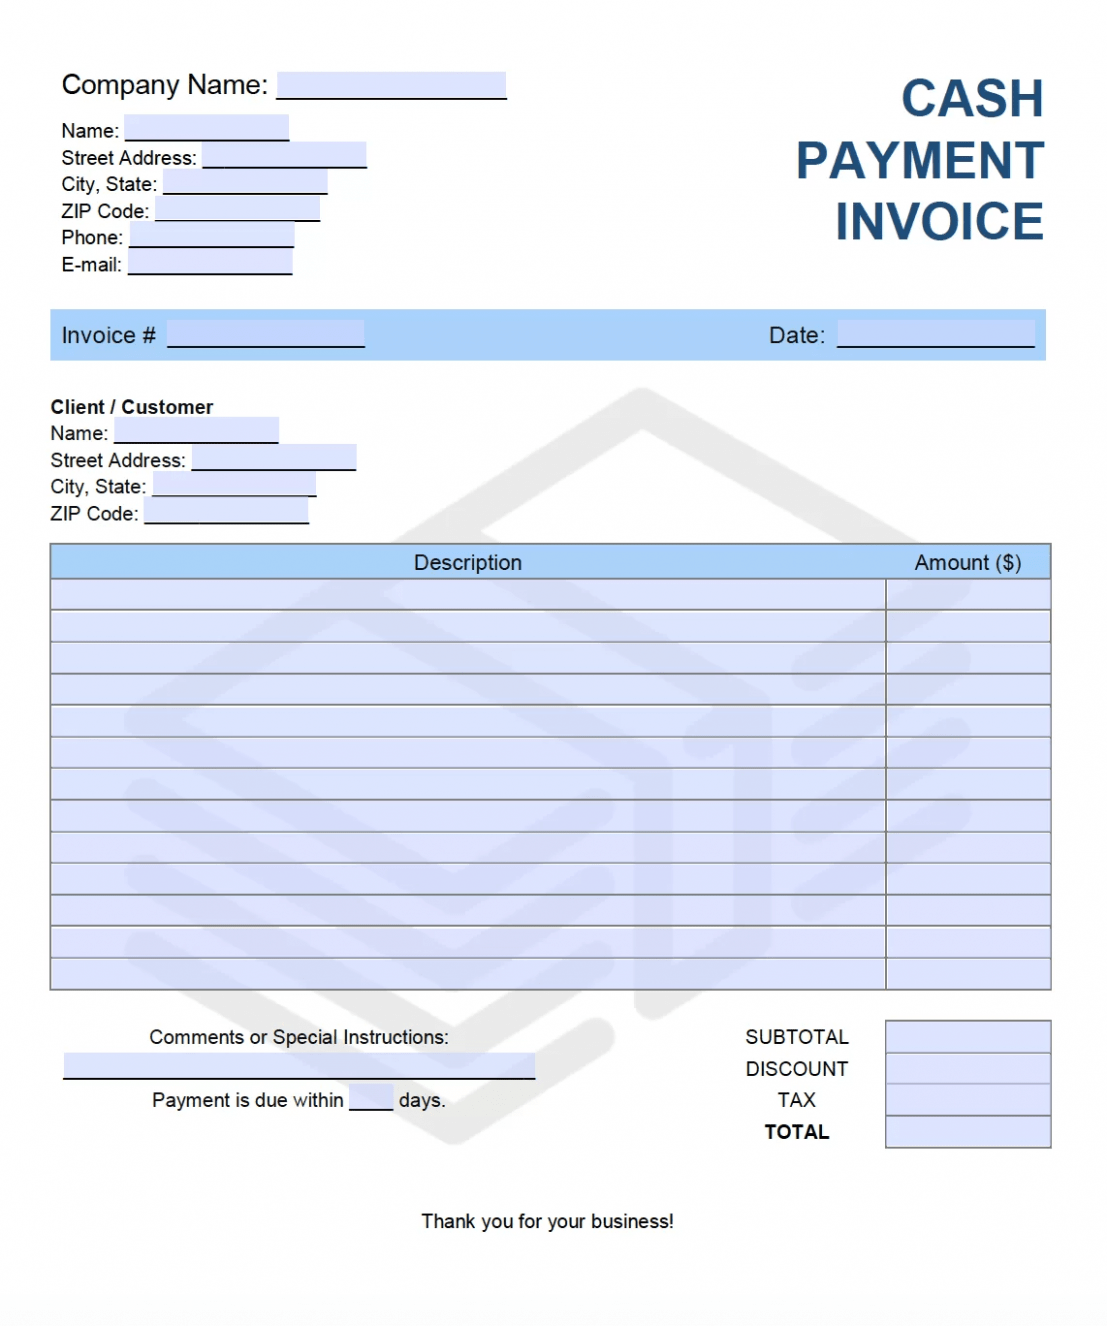 Sample Cash Invoice Template PPT